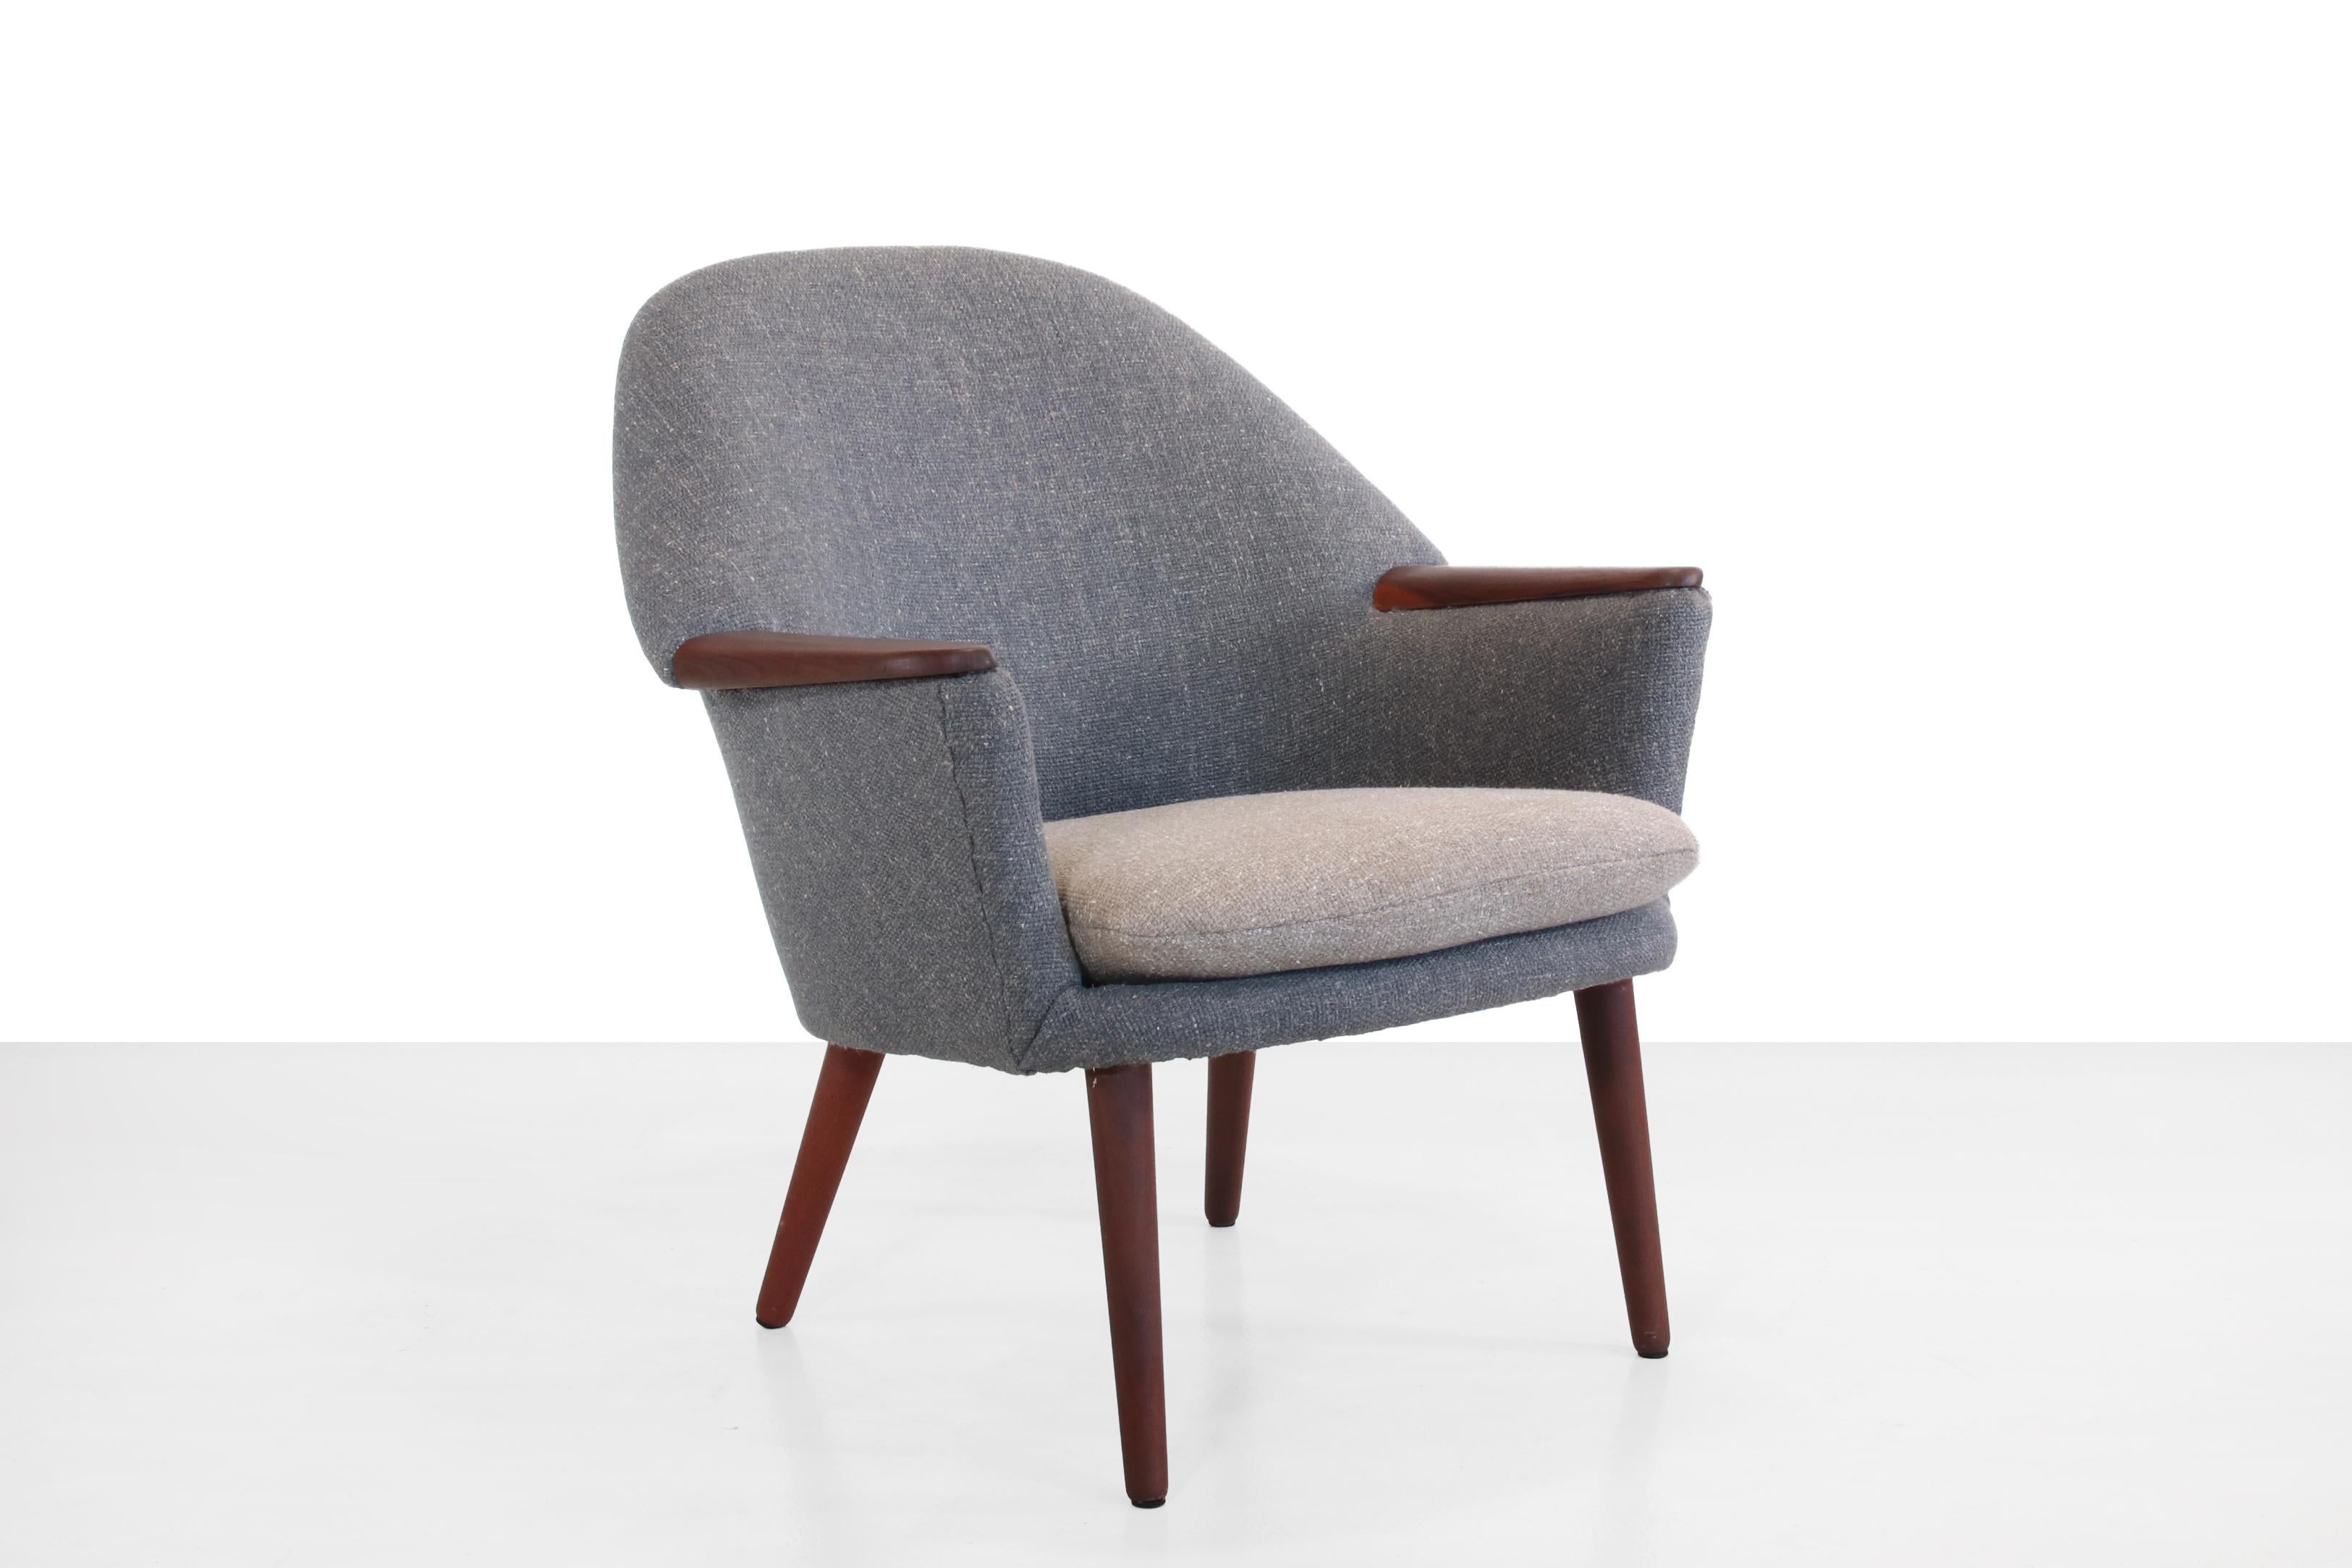 Scandinavian Modern Scandinavian Design Lounge Chair in the Style of Nanna Ditzel, 1960's Denmark For Sale